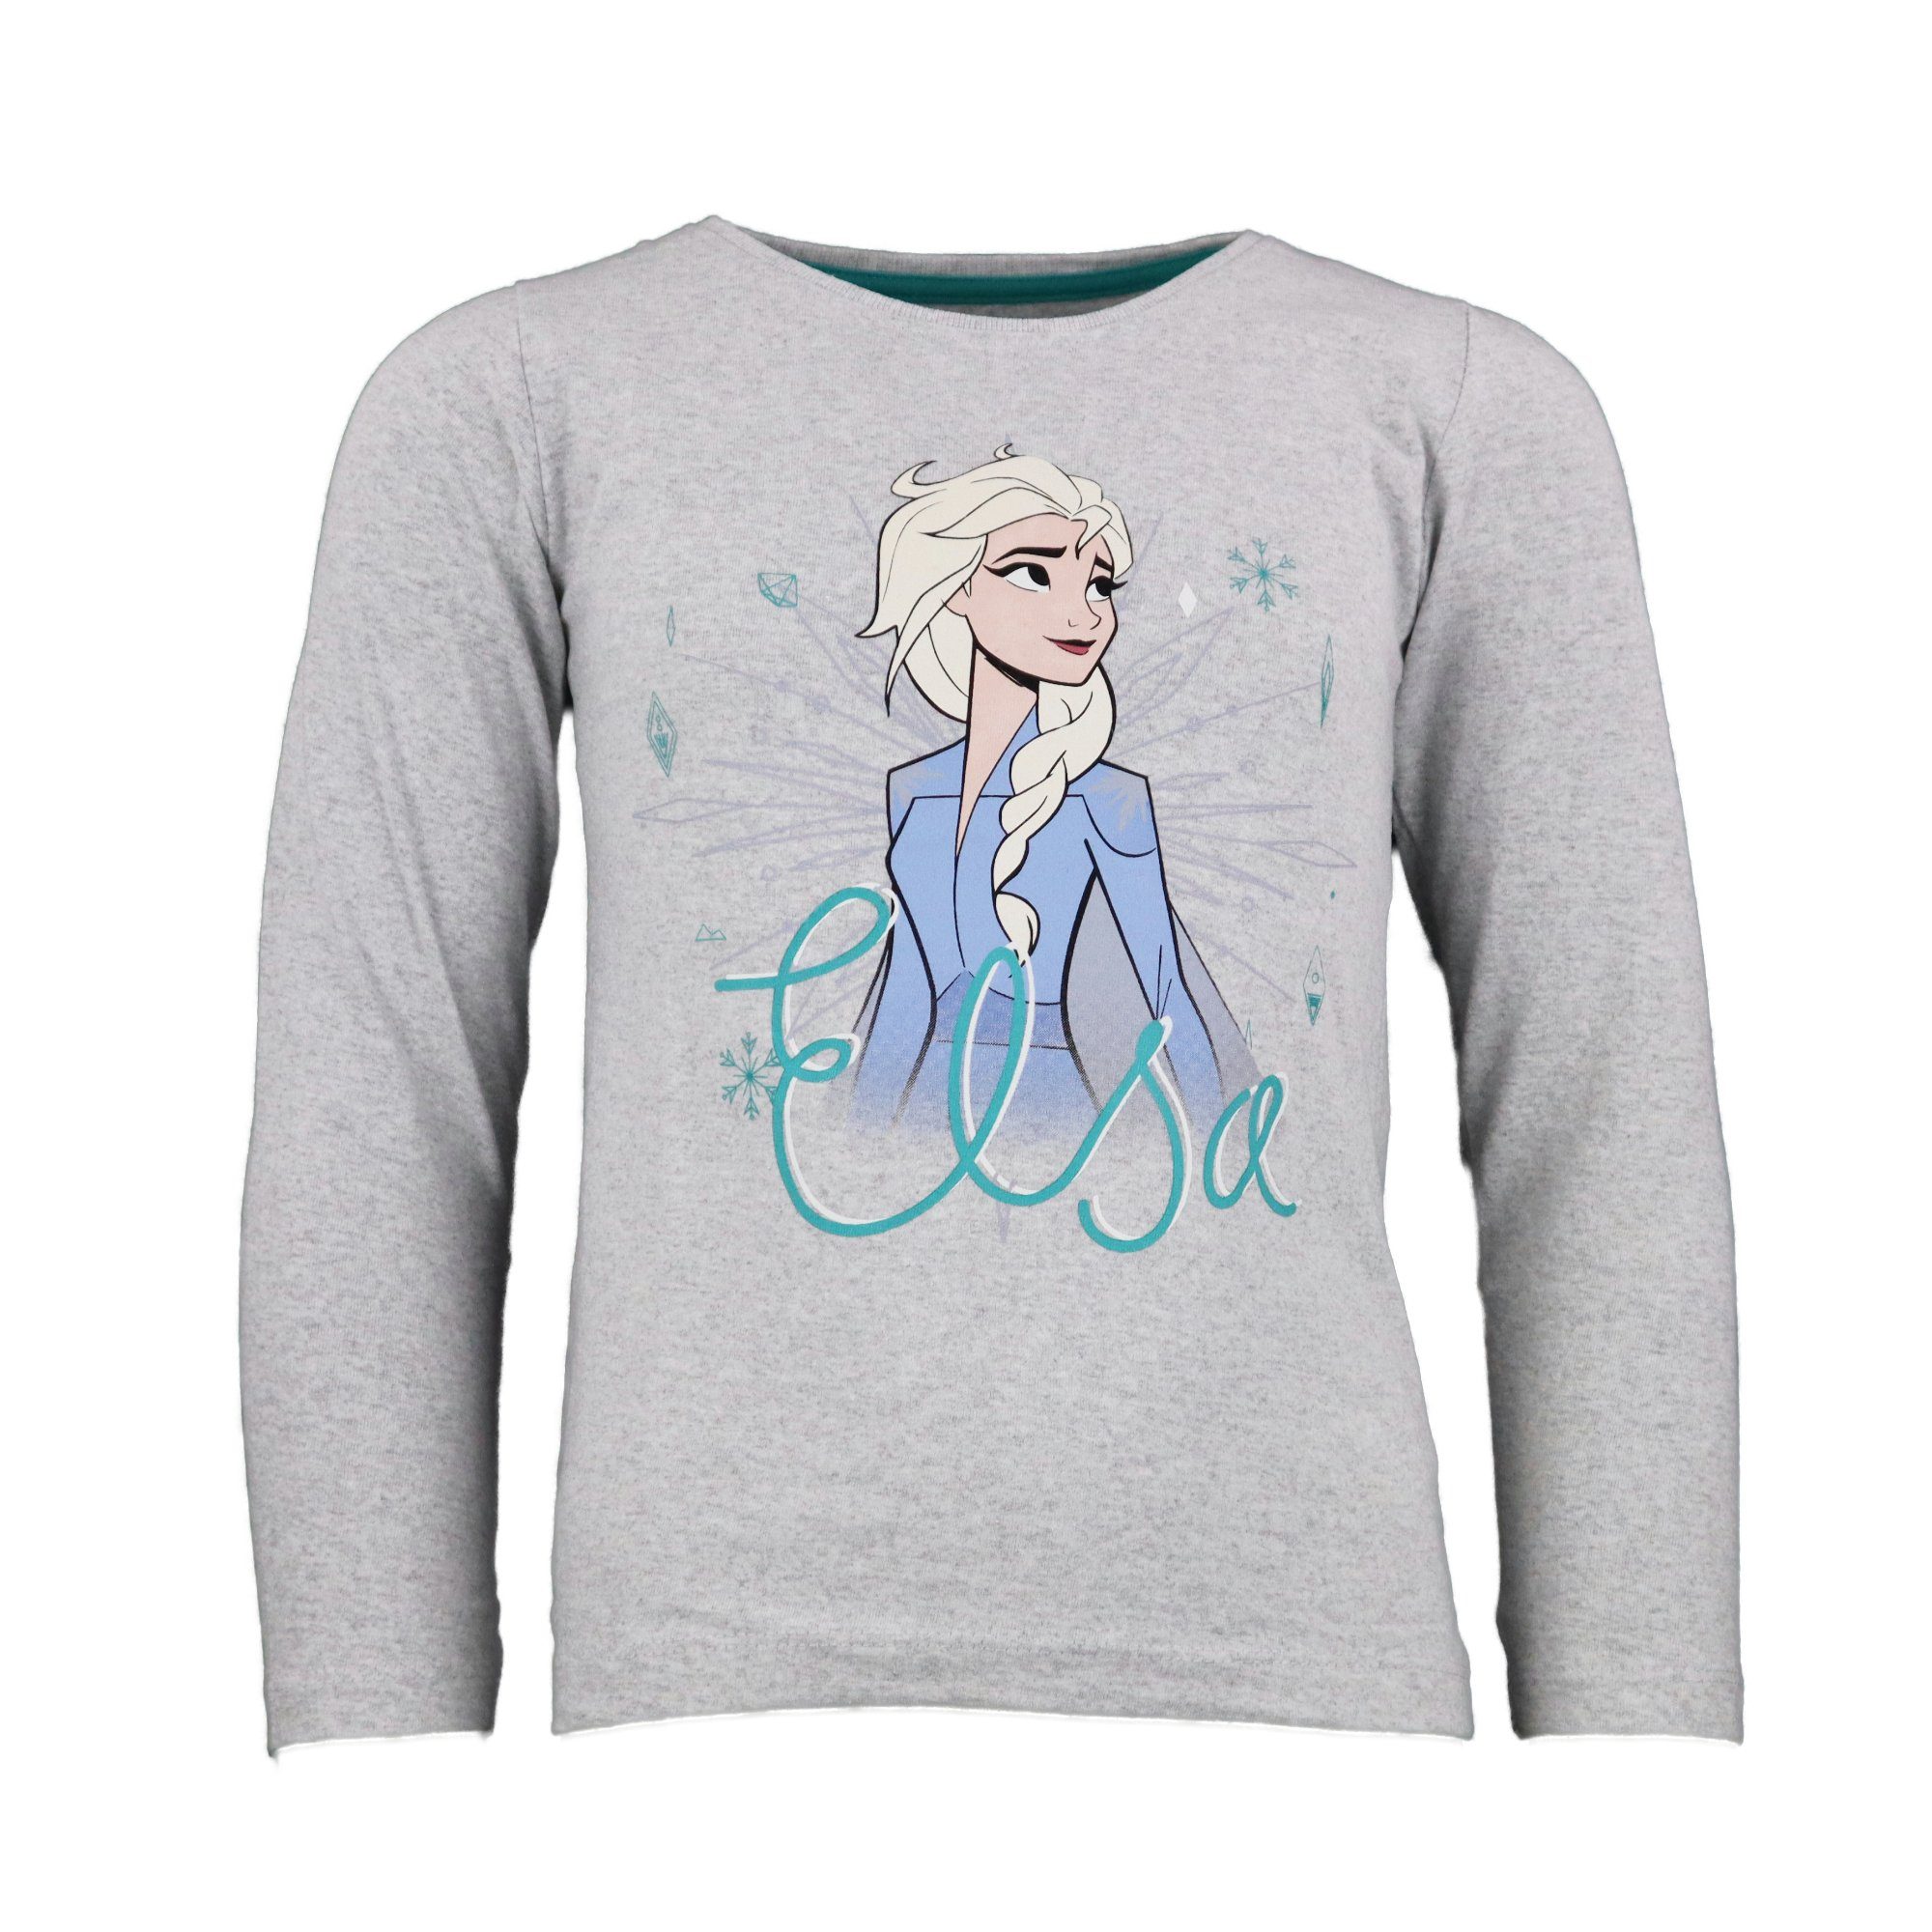 Disney Frozen Langarmshirt Die Eiskönigin Elsa Kinder Shirt Gr. 104 bis 134 Grau